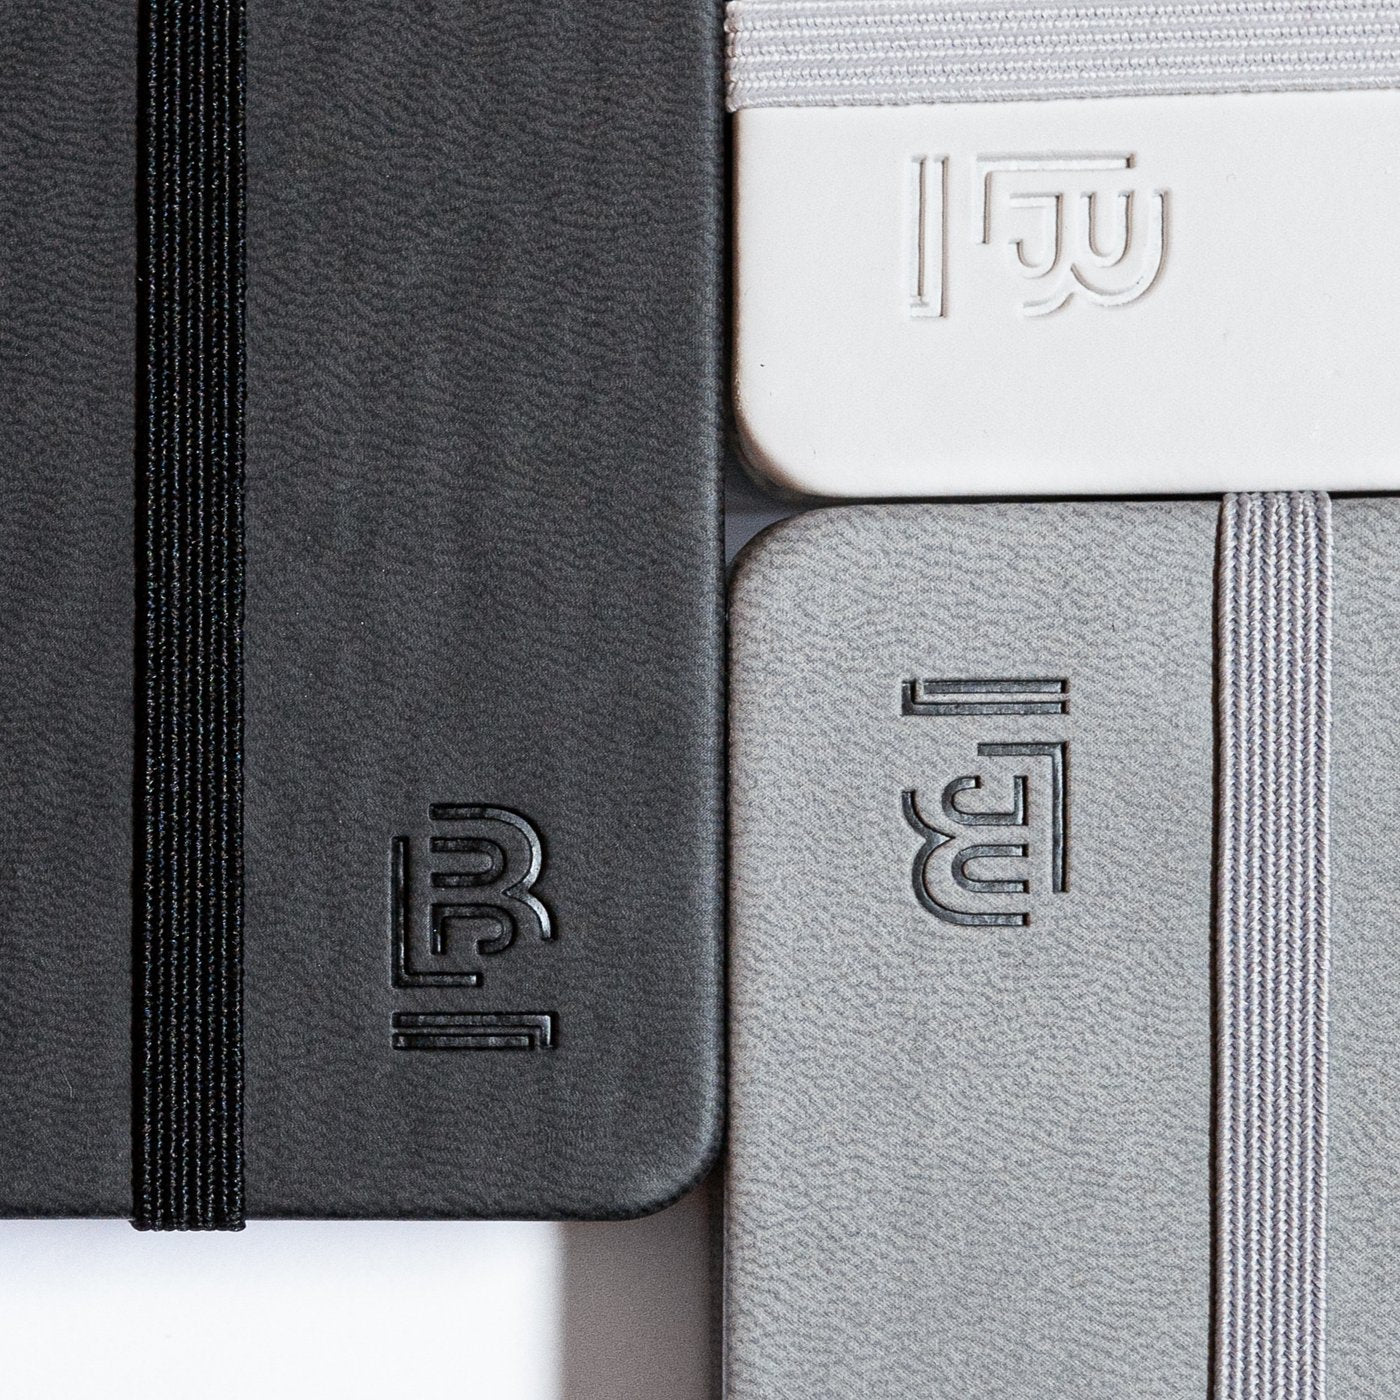 Blackwing Medium (A5) Slate Notebook- Grey